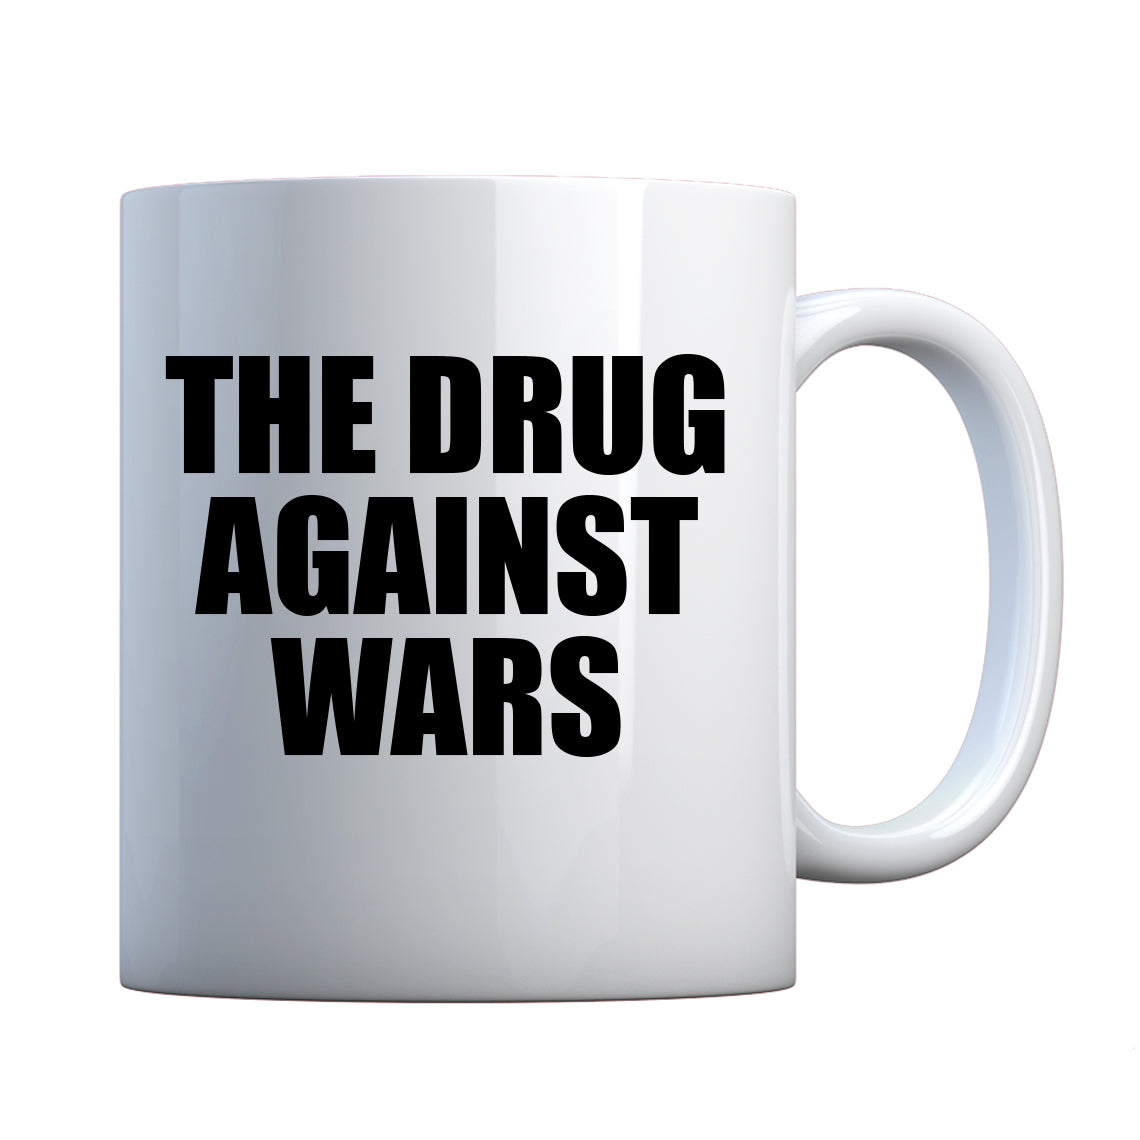 Mug The Drug Against Wars Ceramic Gift Mug